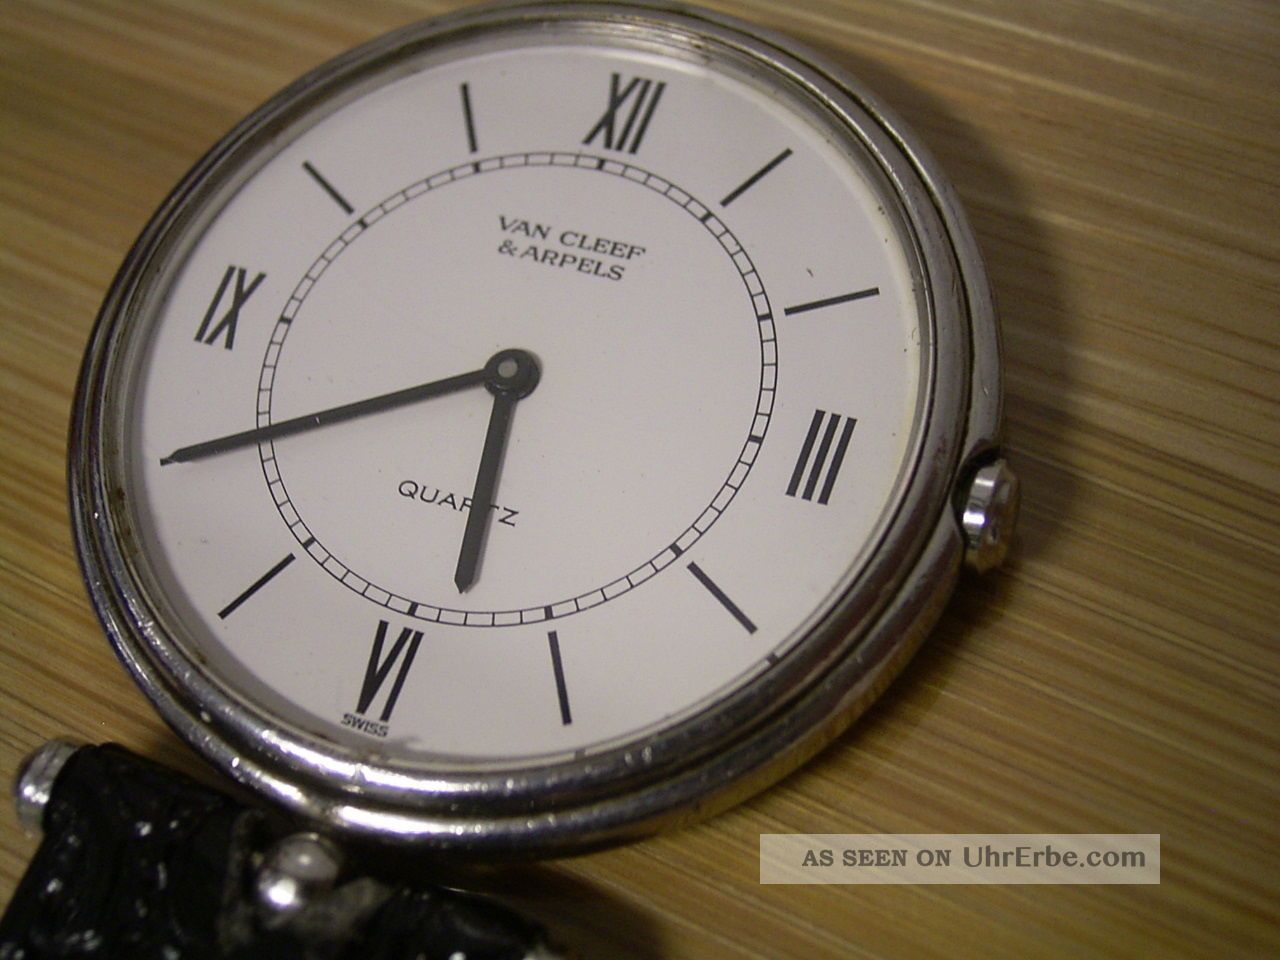 Van - Cleef - Arpels Schweizer Armbanduhr Stahl Armbanduhren Bild